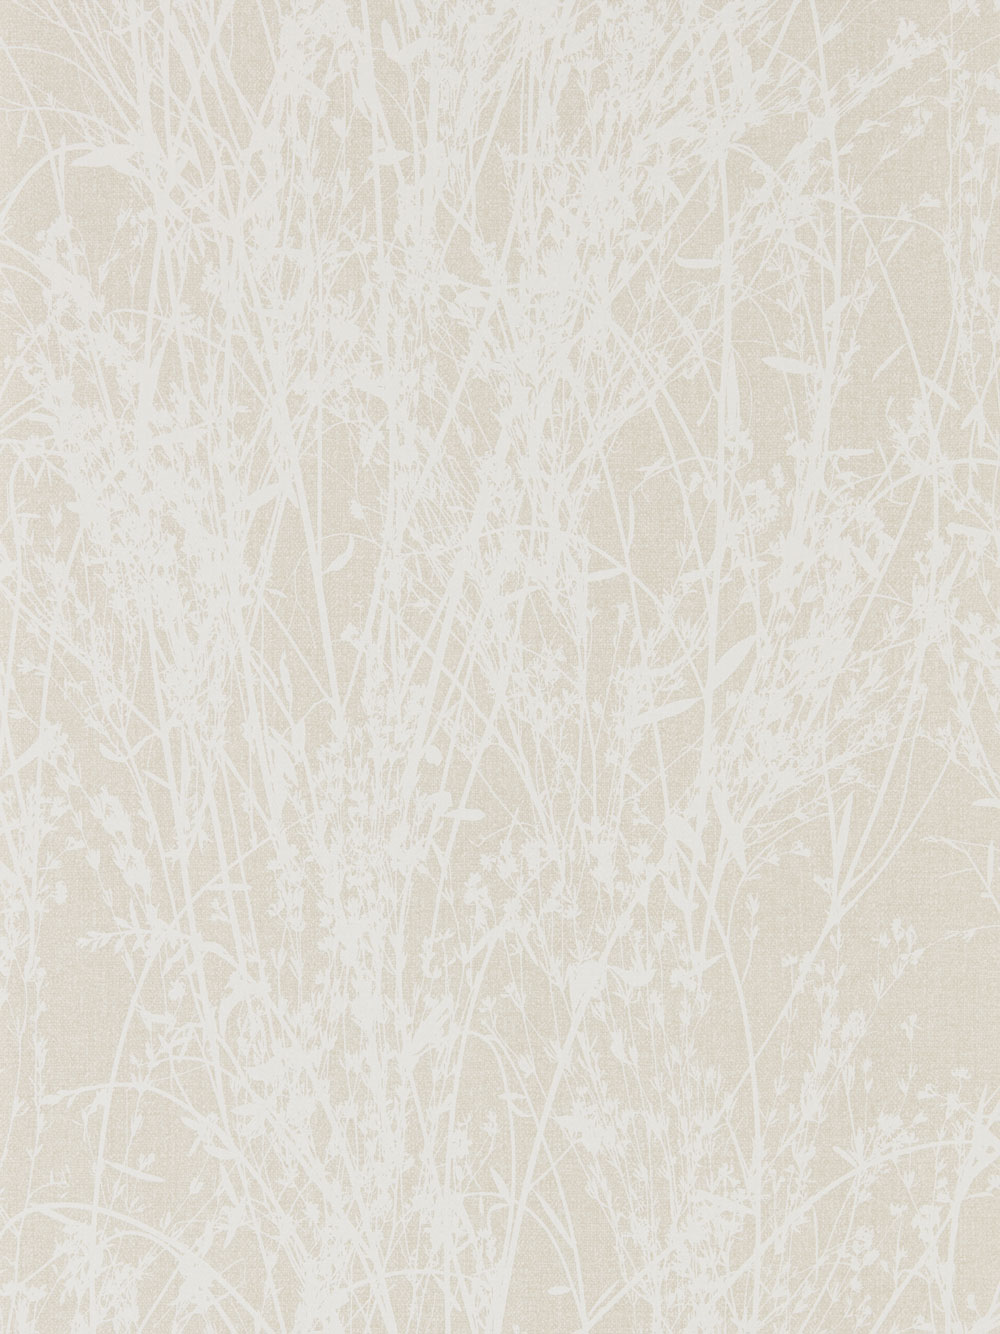 Meadow Canvas Wallpaper - White / Parchment - by Sanderson